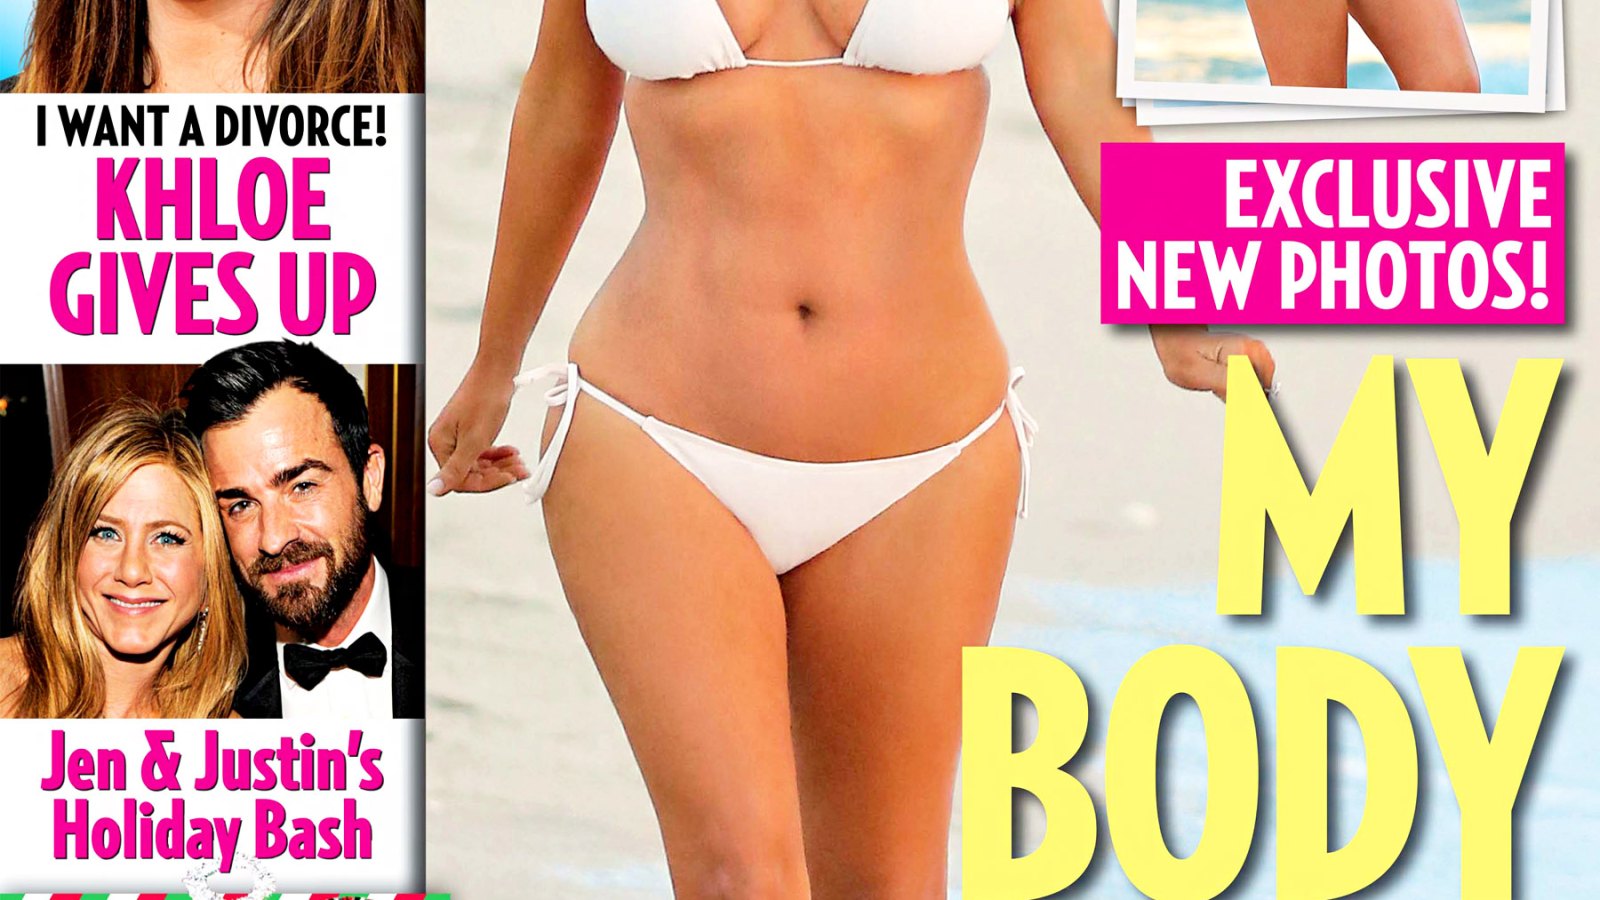 Kim Kardashian's bikini body on the cover of Us Weekly